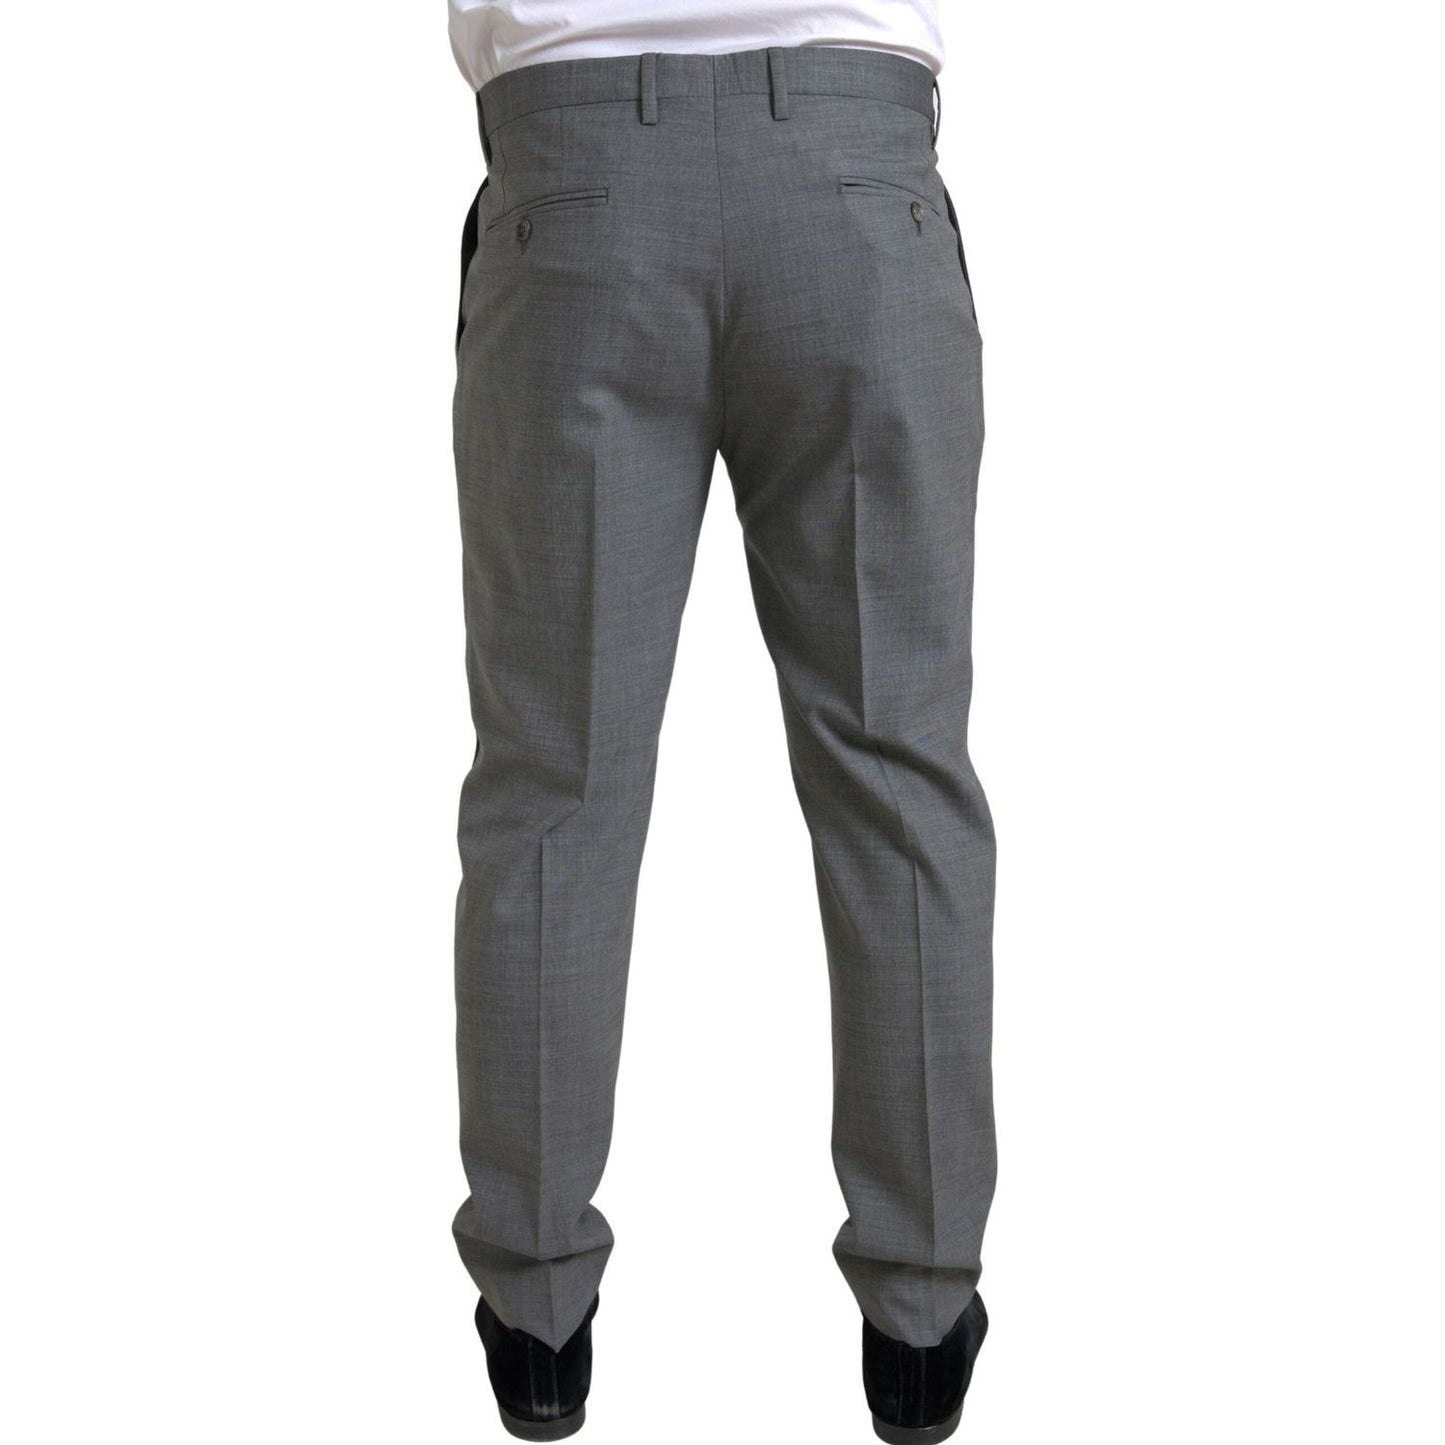 Dolce & Gabbana Elegant Skinny Wool Dress Pants in Grey gray-wool-chino-skinny-men-dress-trouser-pants 465A9102bg-scaled-5eb393a1-9c9.jpg